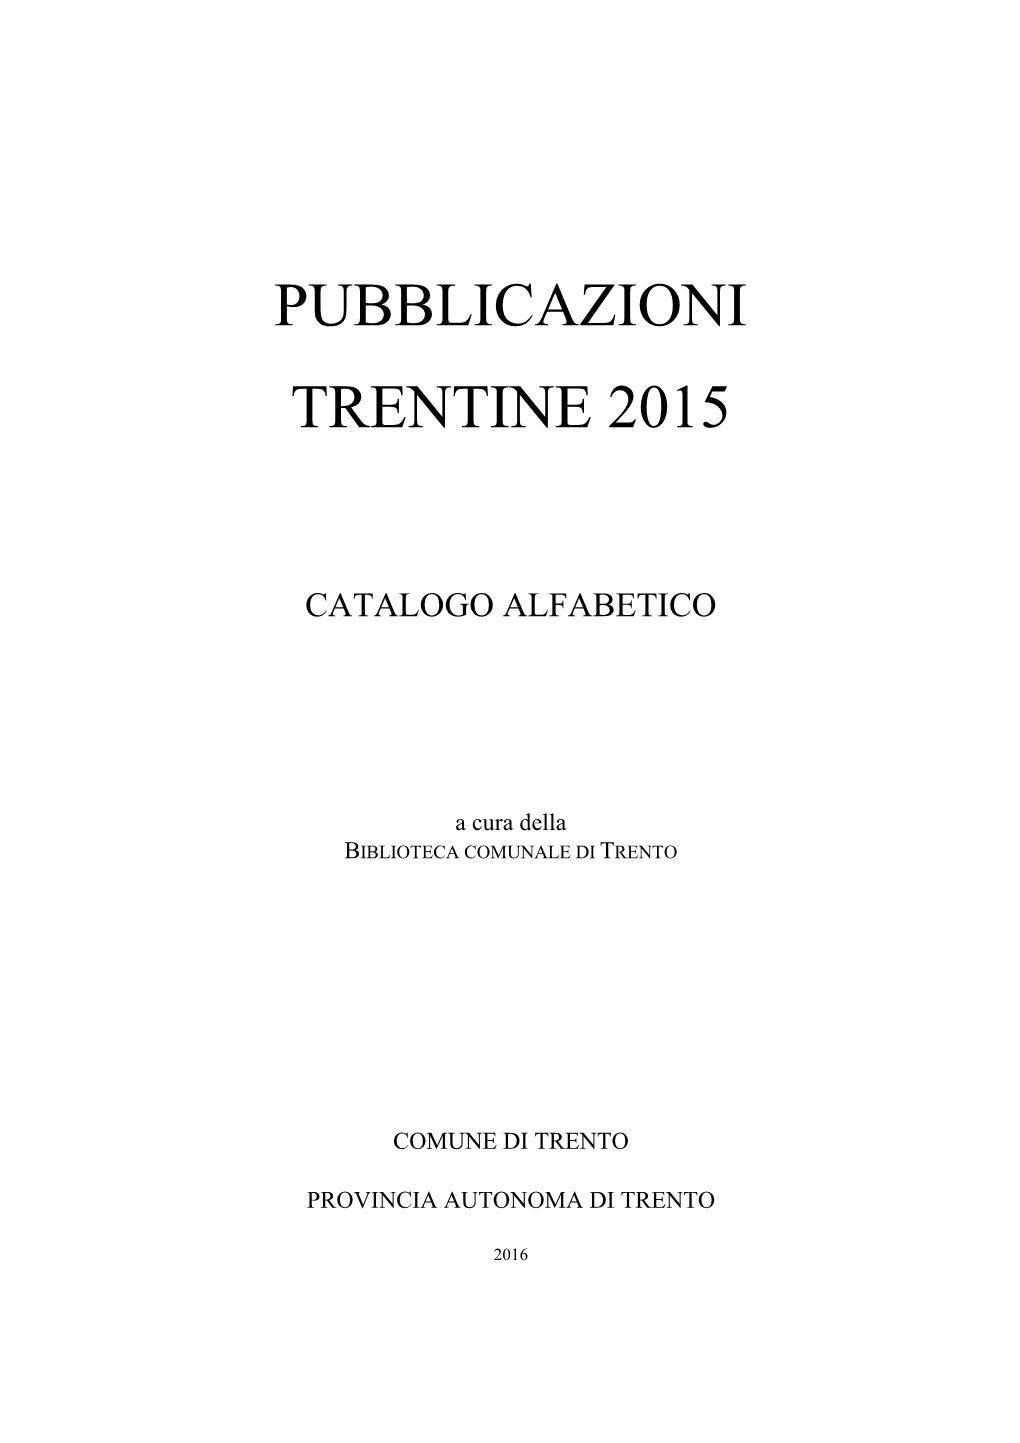 Pubblicazioni Trentine 2015